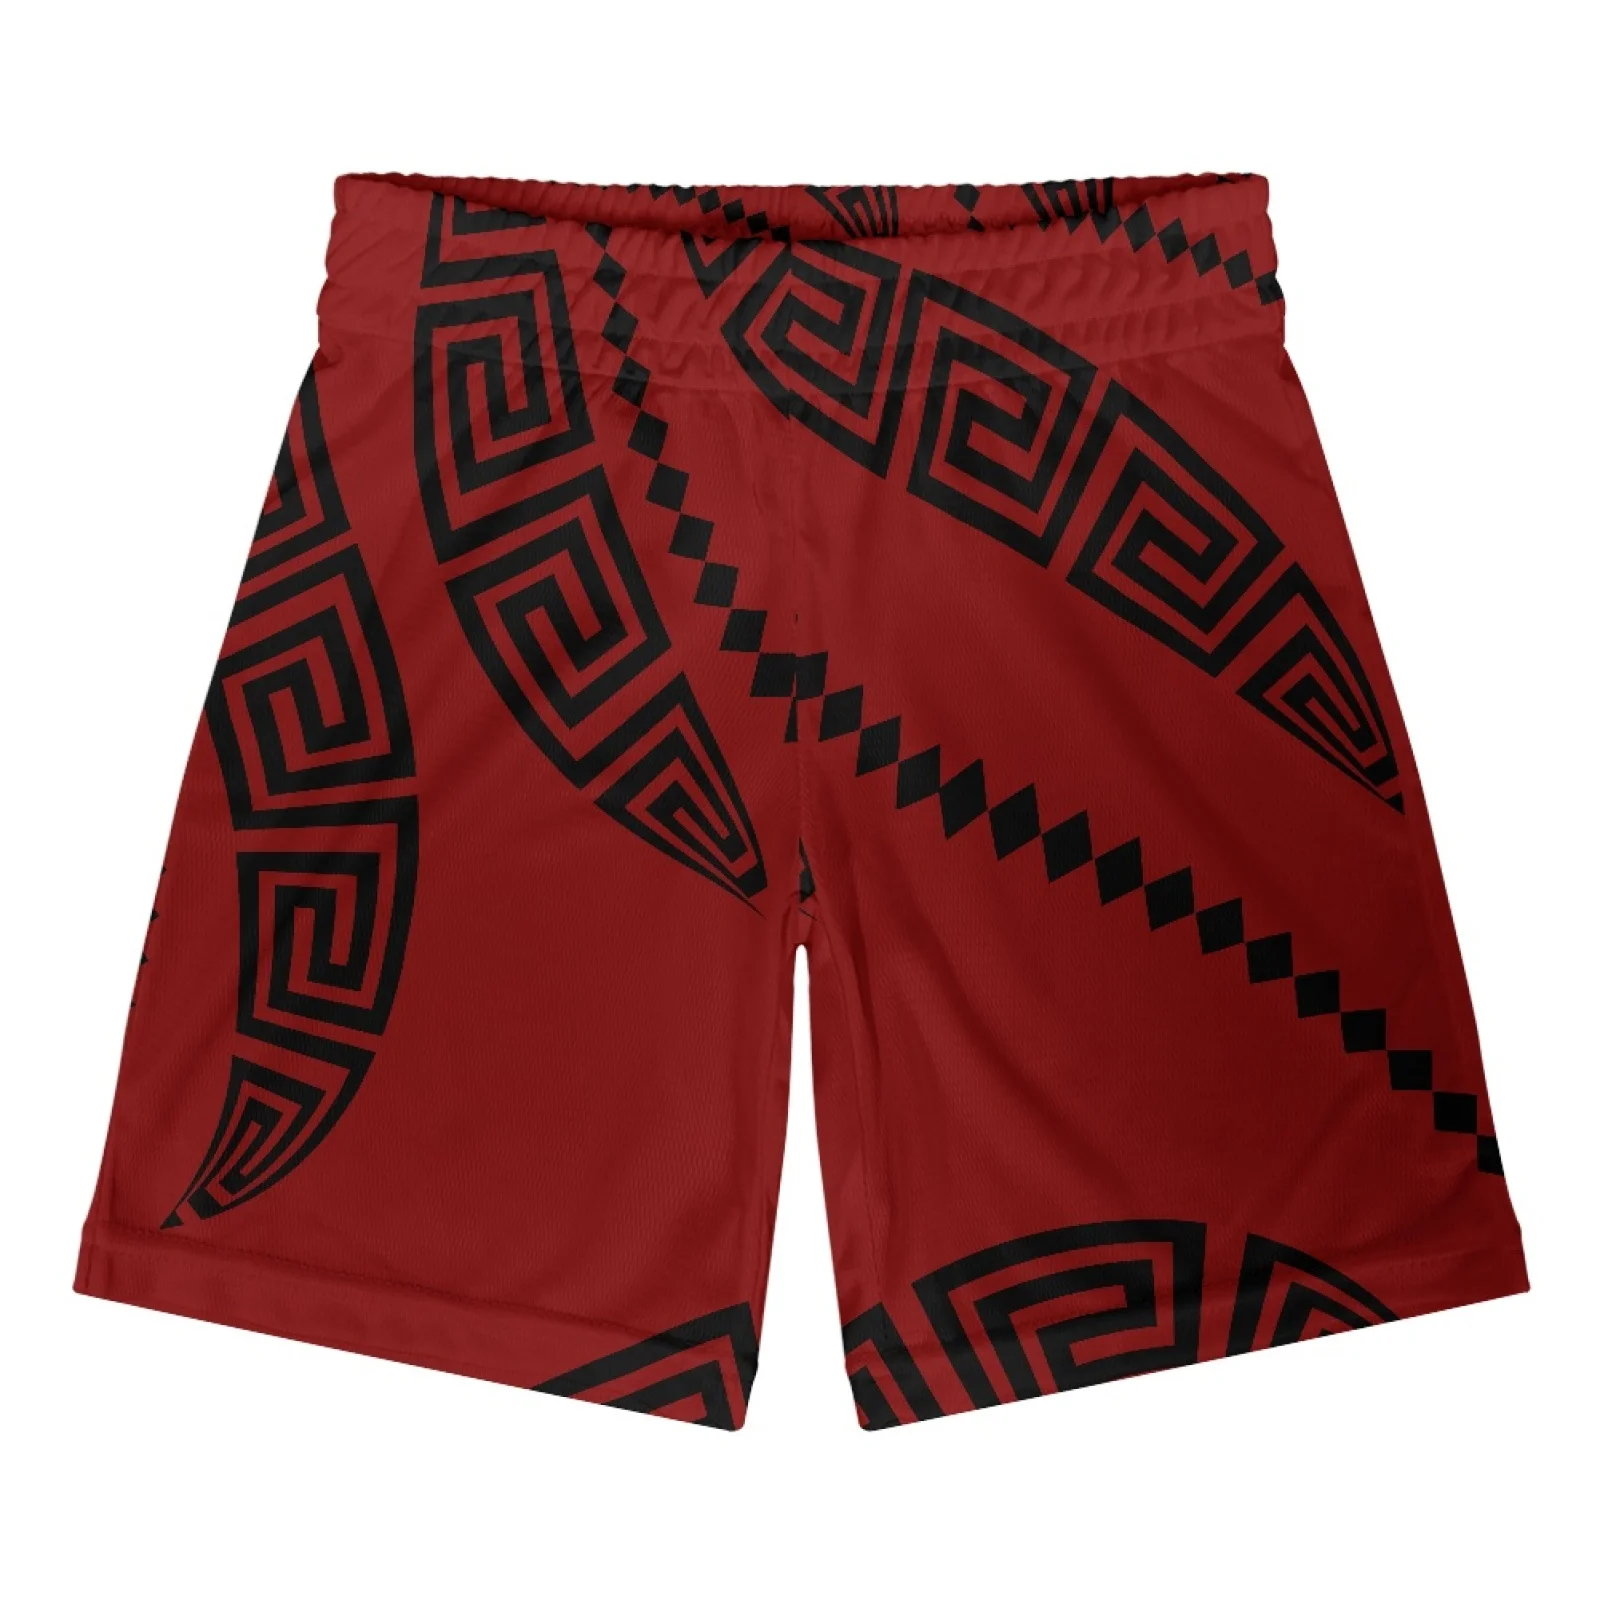 

Polynesian Tribal Fijian Totem Tattoo Fiji Prints Men Basketball Shorts Hot Pants Elastic Waistband Patchwork Shorts Casual Wear